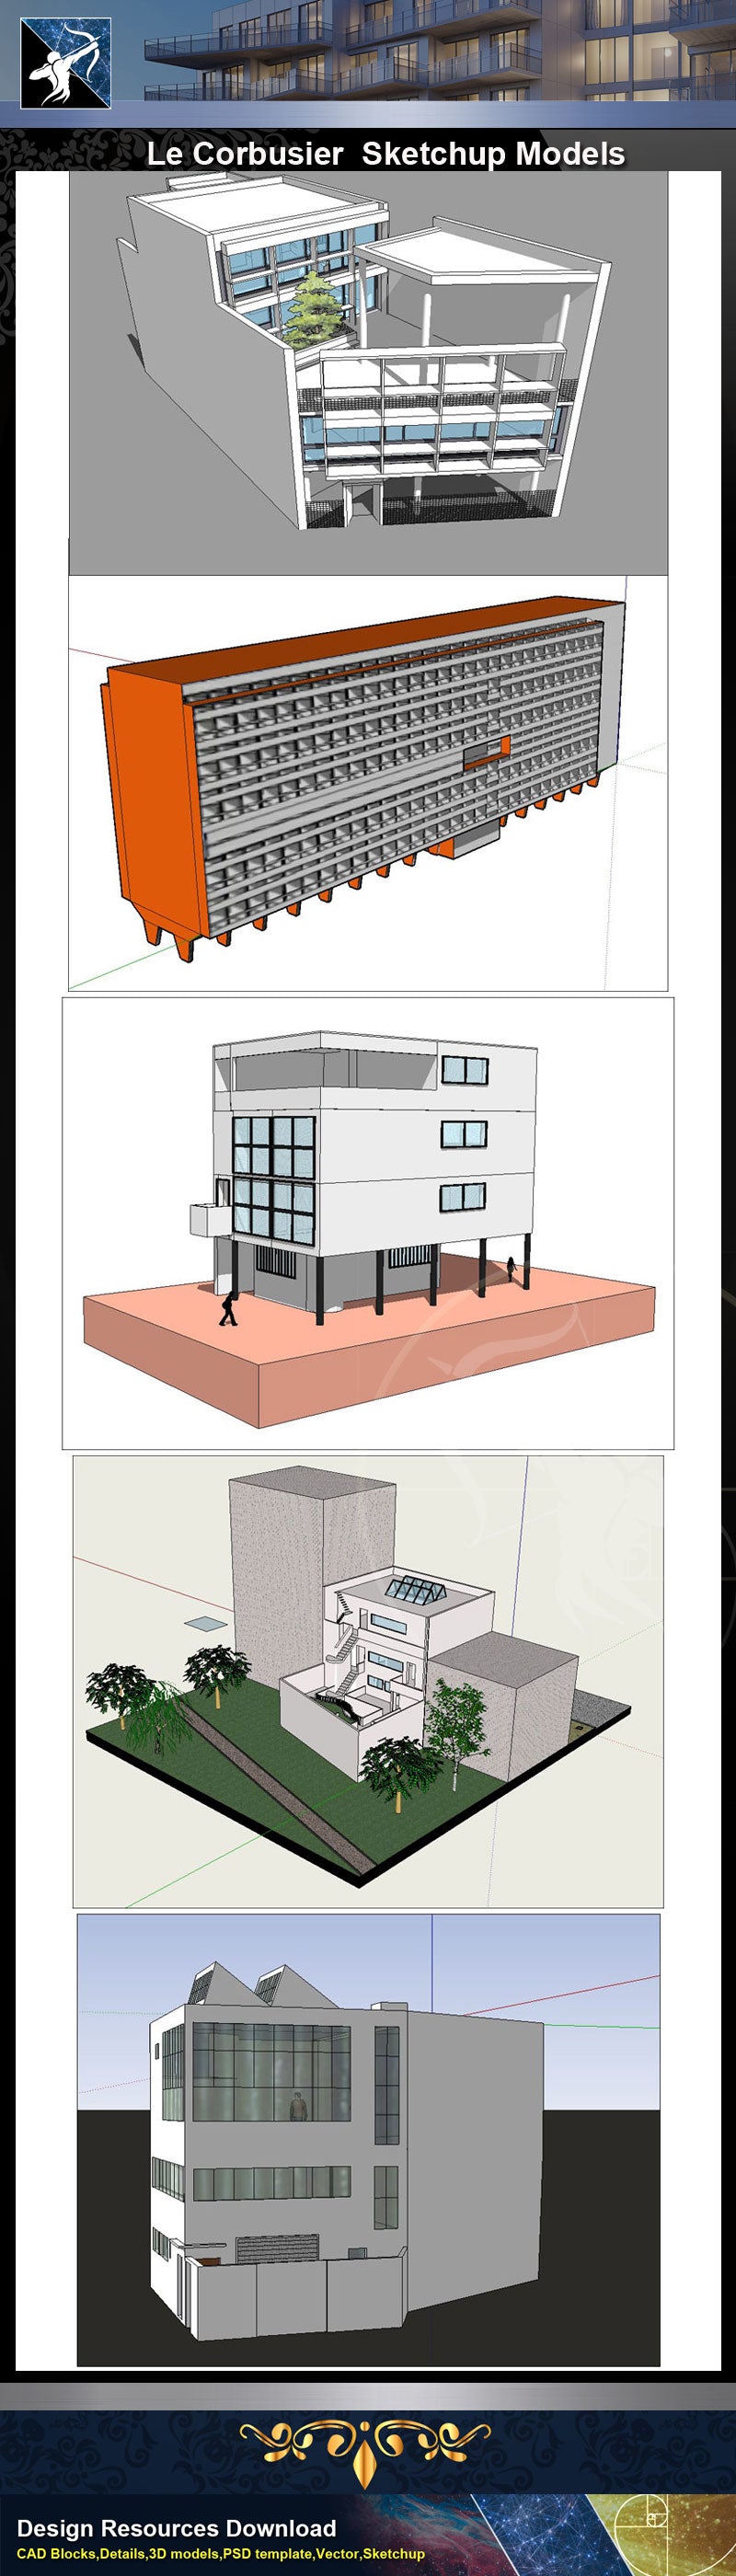 ★Famous Architecture -24 Kinds of Le Corbusier Sketchup 3D Models